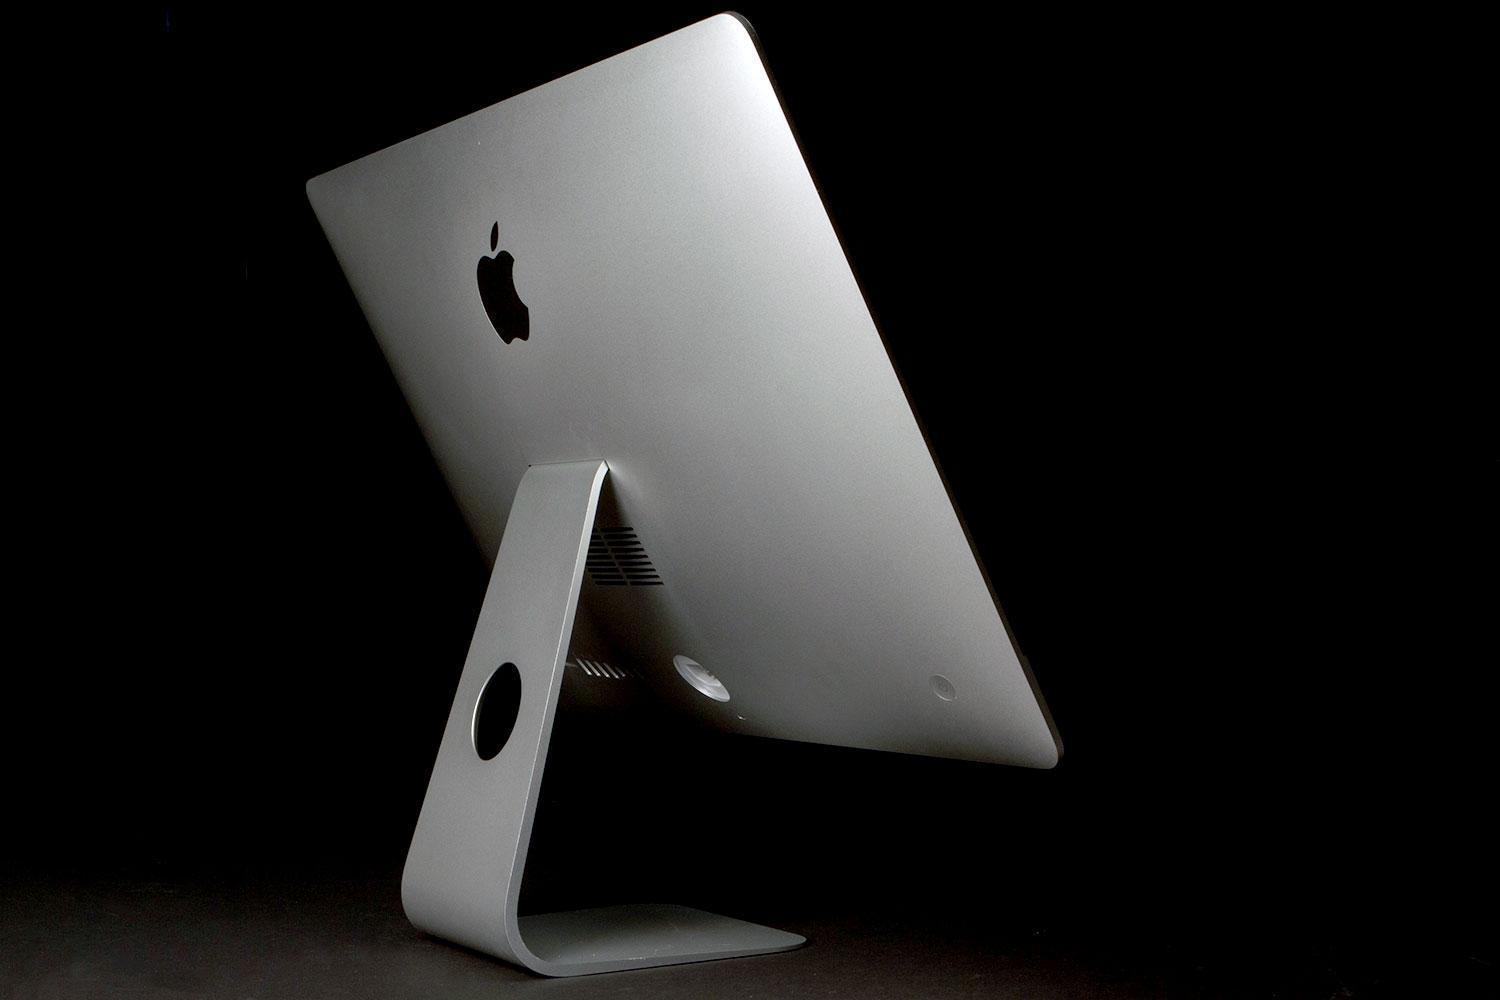 Apple iMac 2014 back angle up1